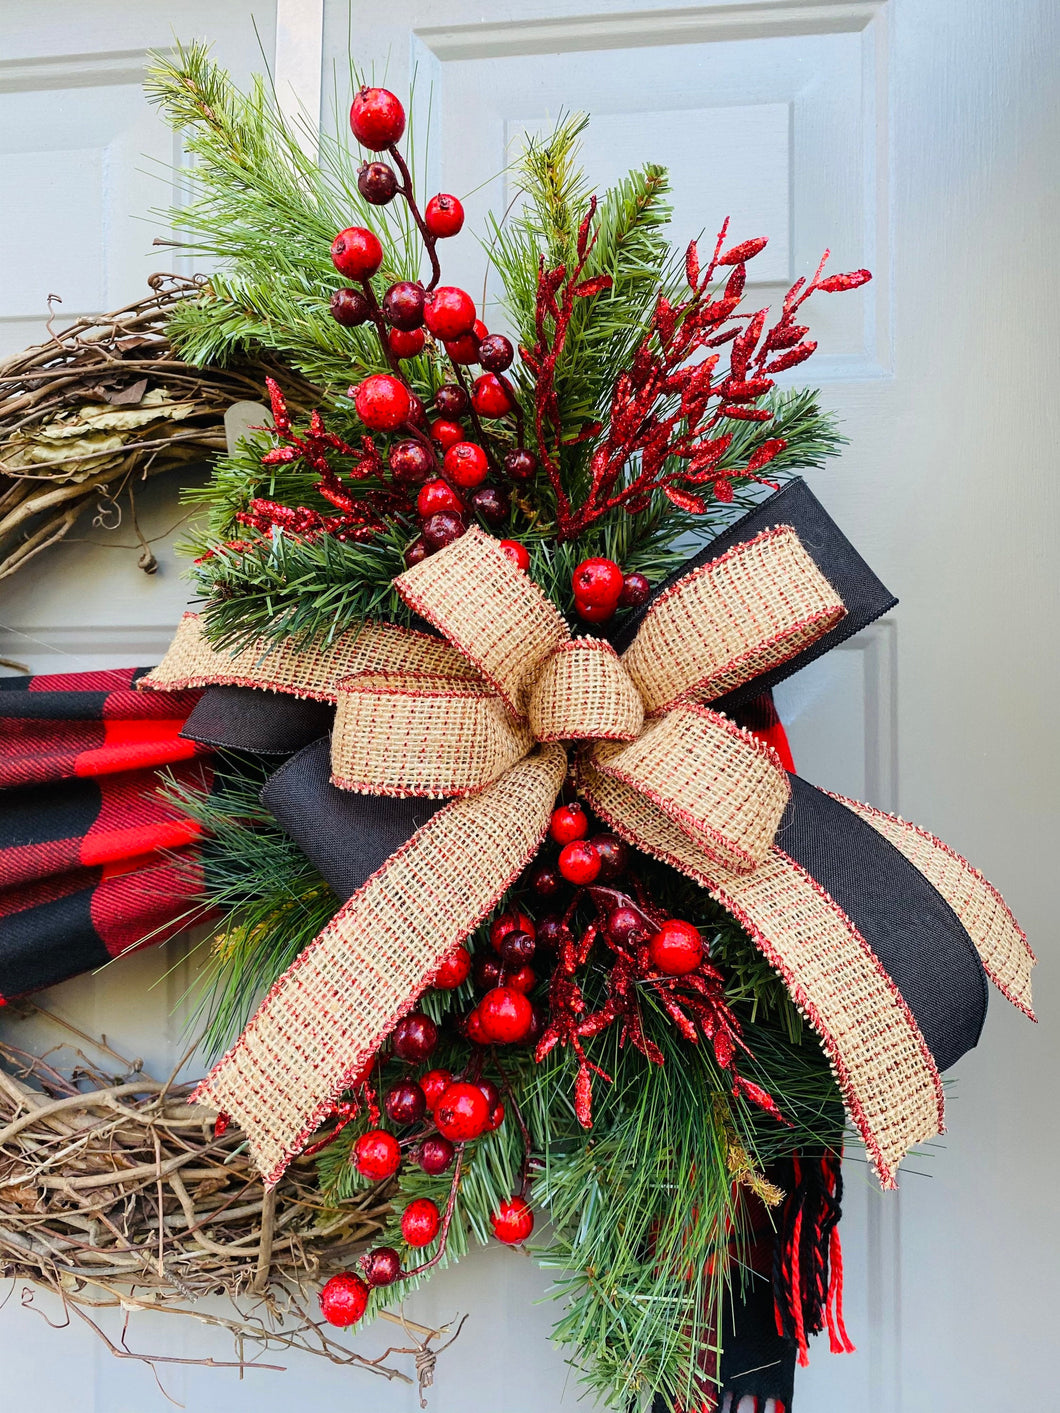 Buffalo Check Wreath / Christmas Wreath / Farmhouse Wreath / Front